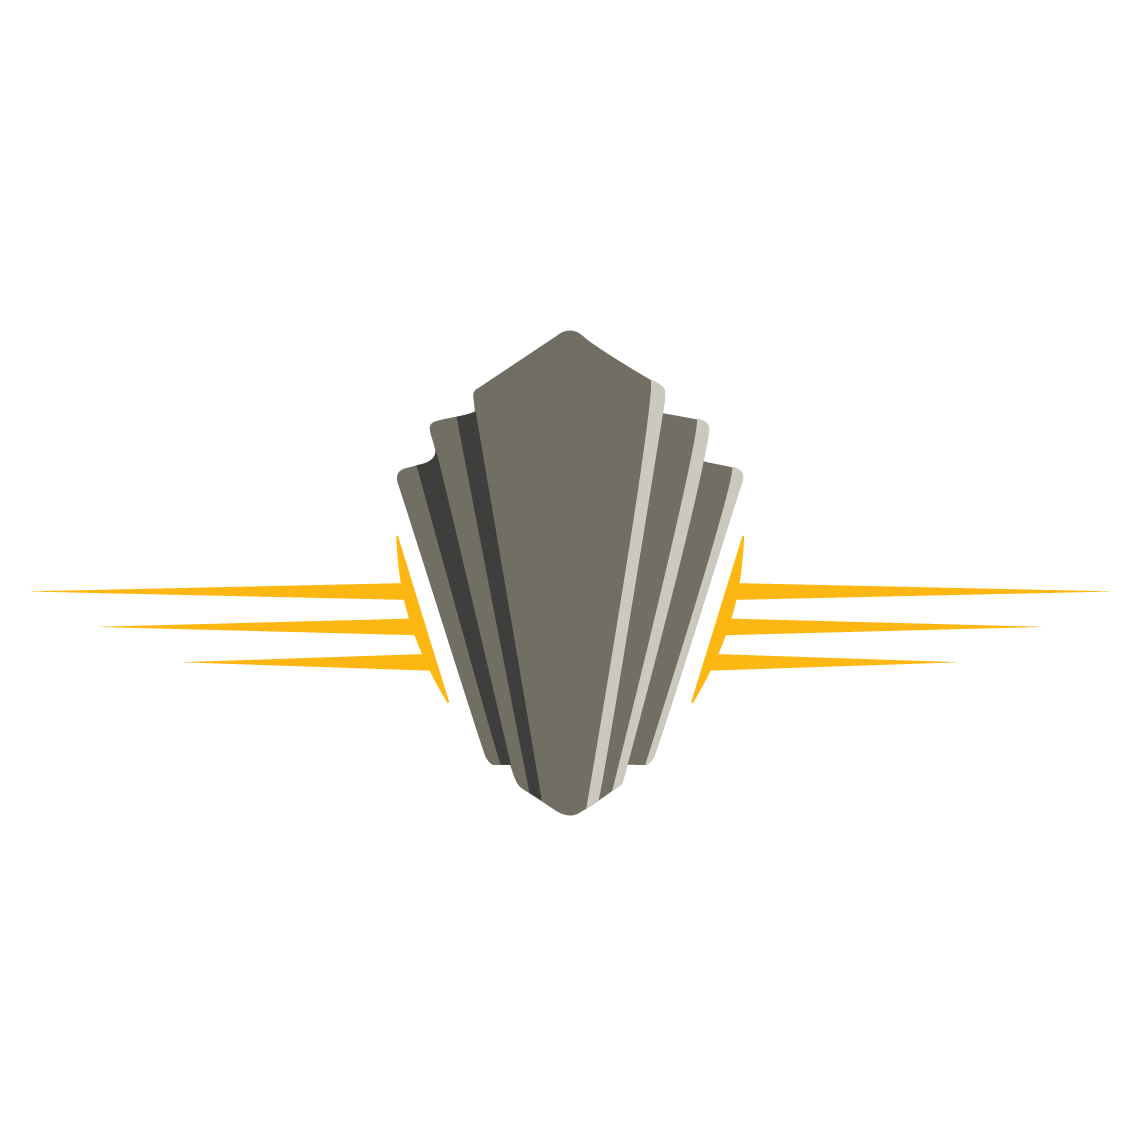 Bellingar Estates